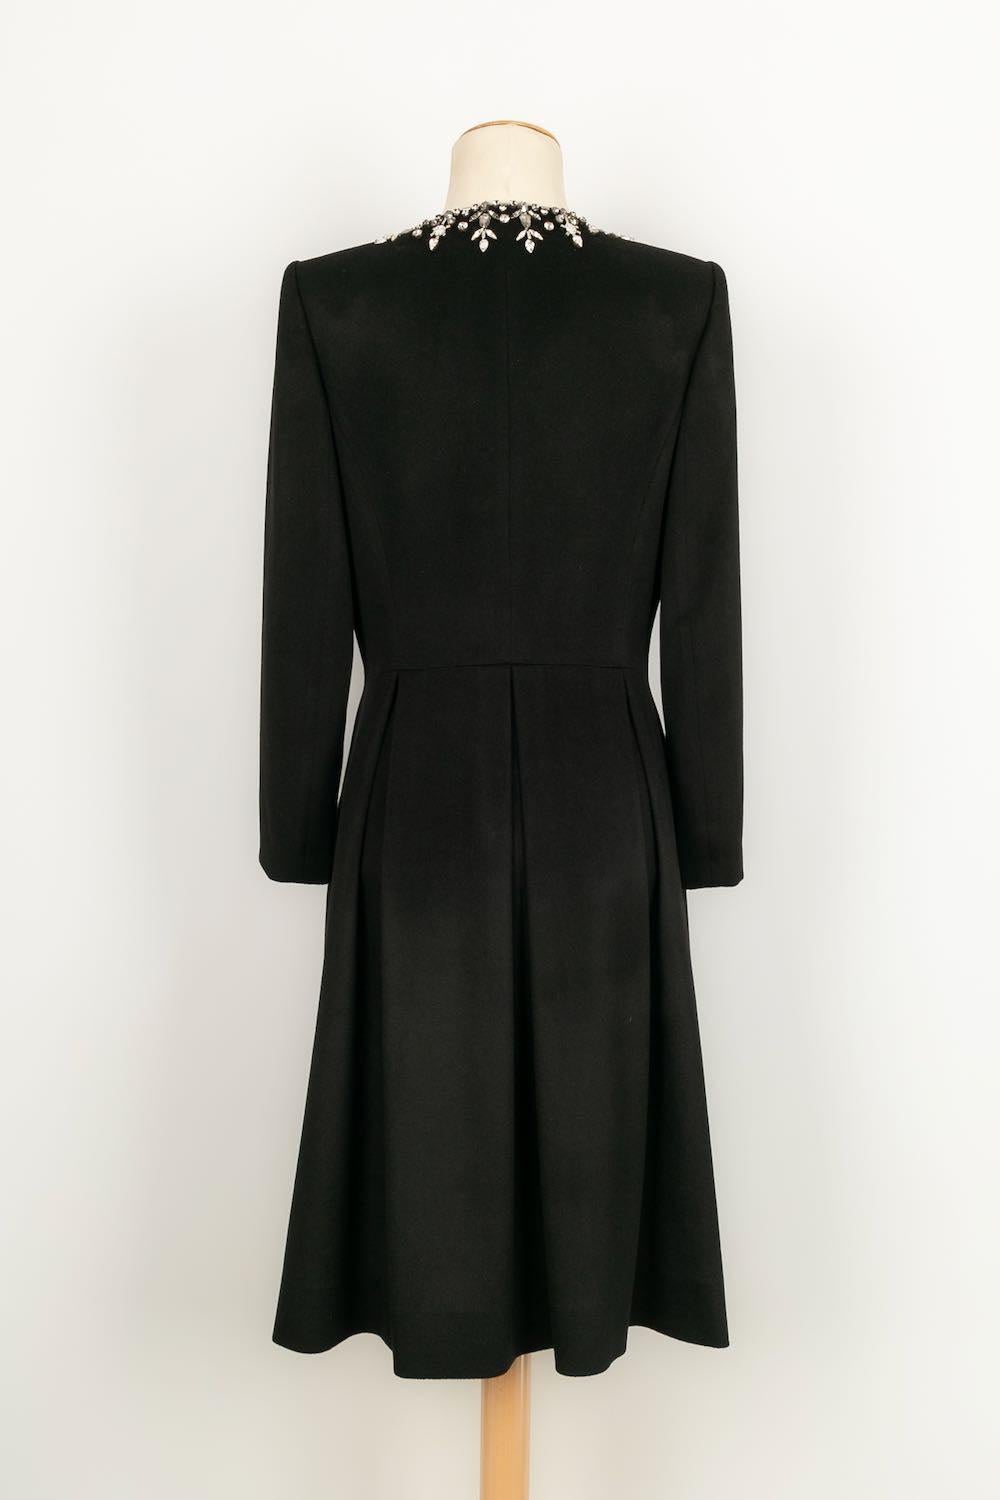 Women's Azzaro Long Black Cashmere Jacket, Size 40FR For Sale